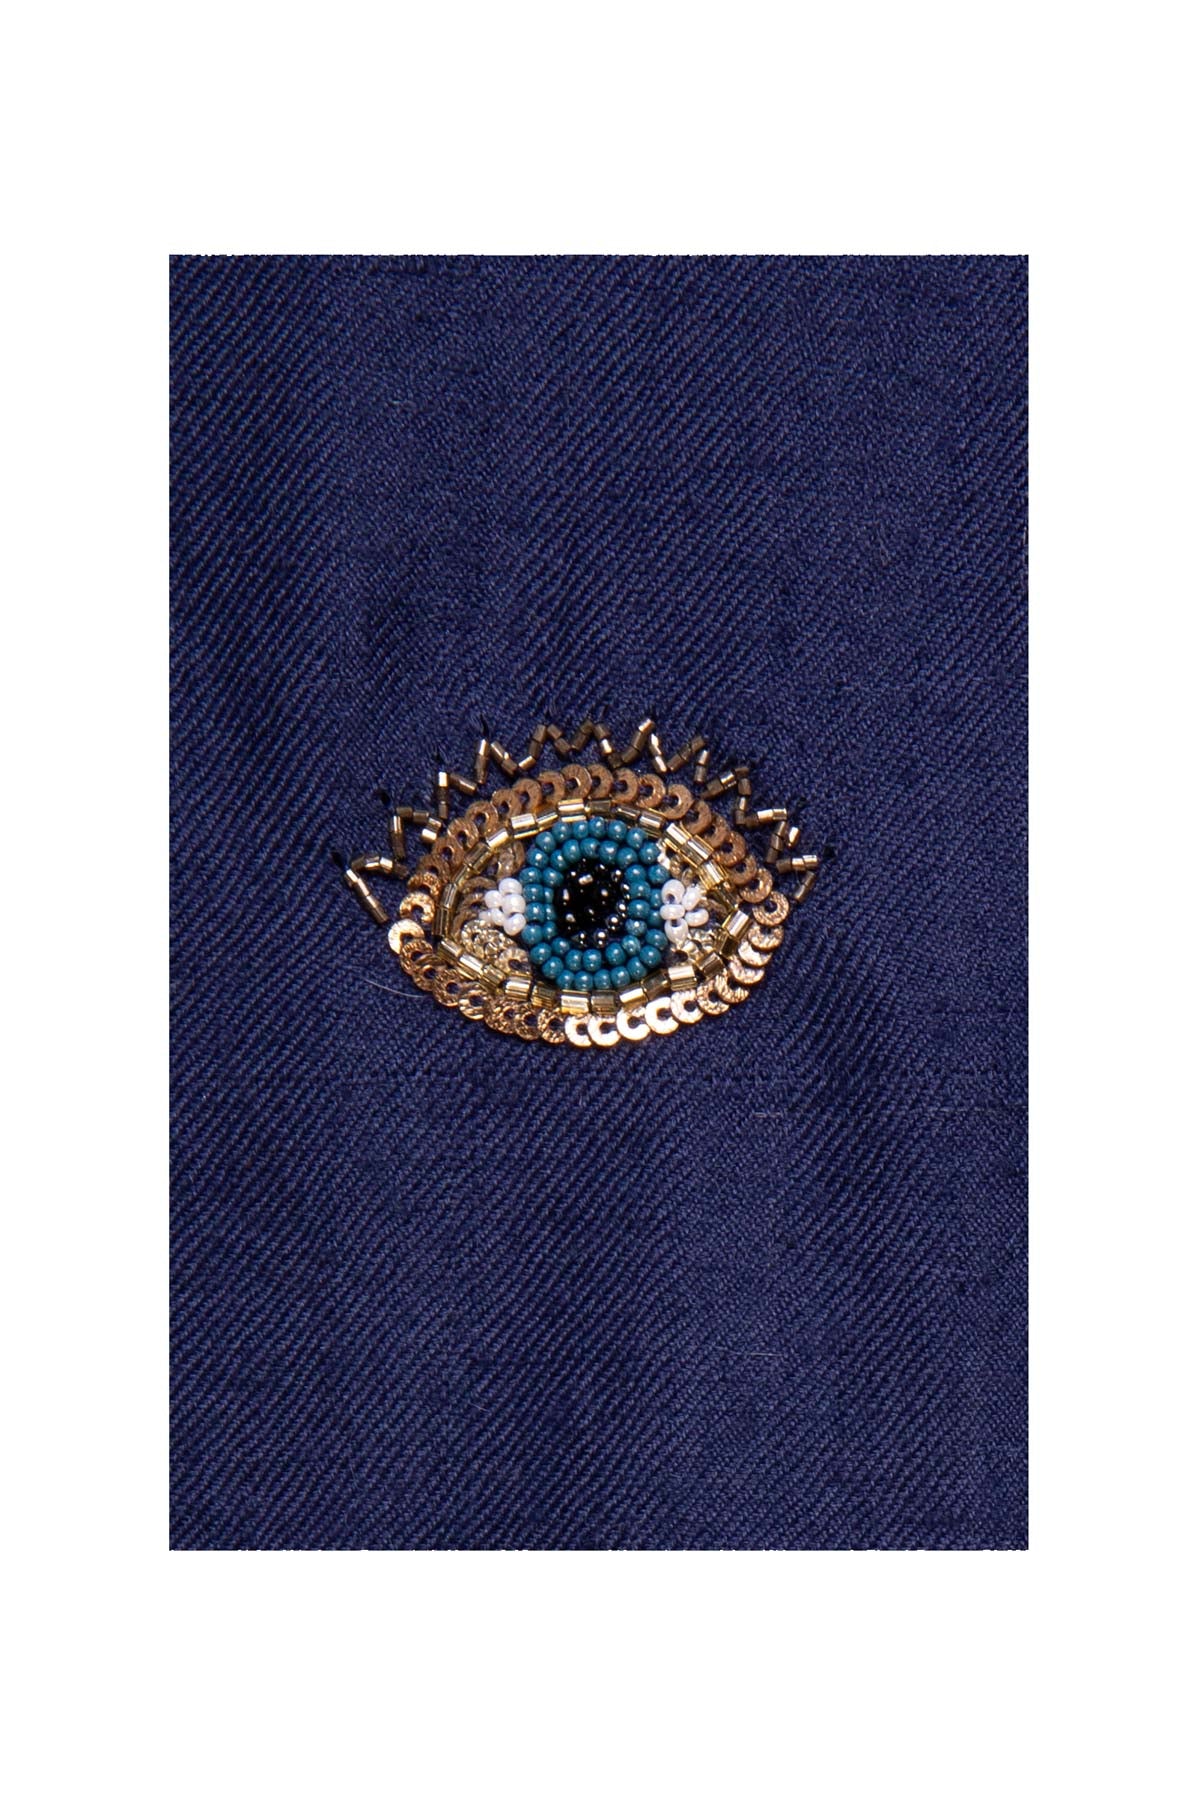 Eye Embroidered Pashmina Shawl - Ink Blue